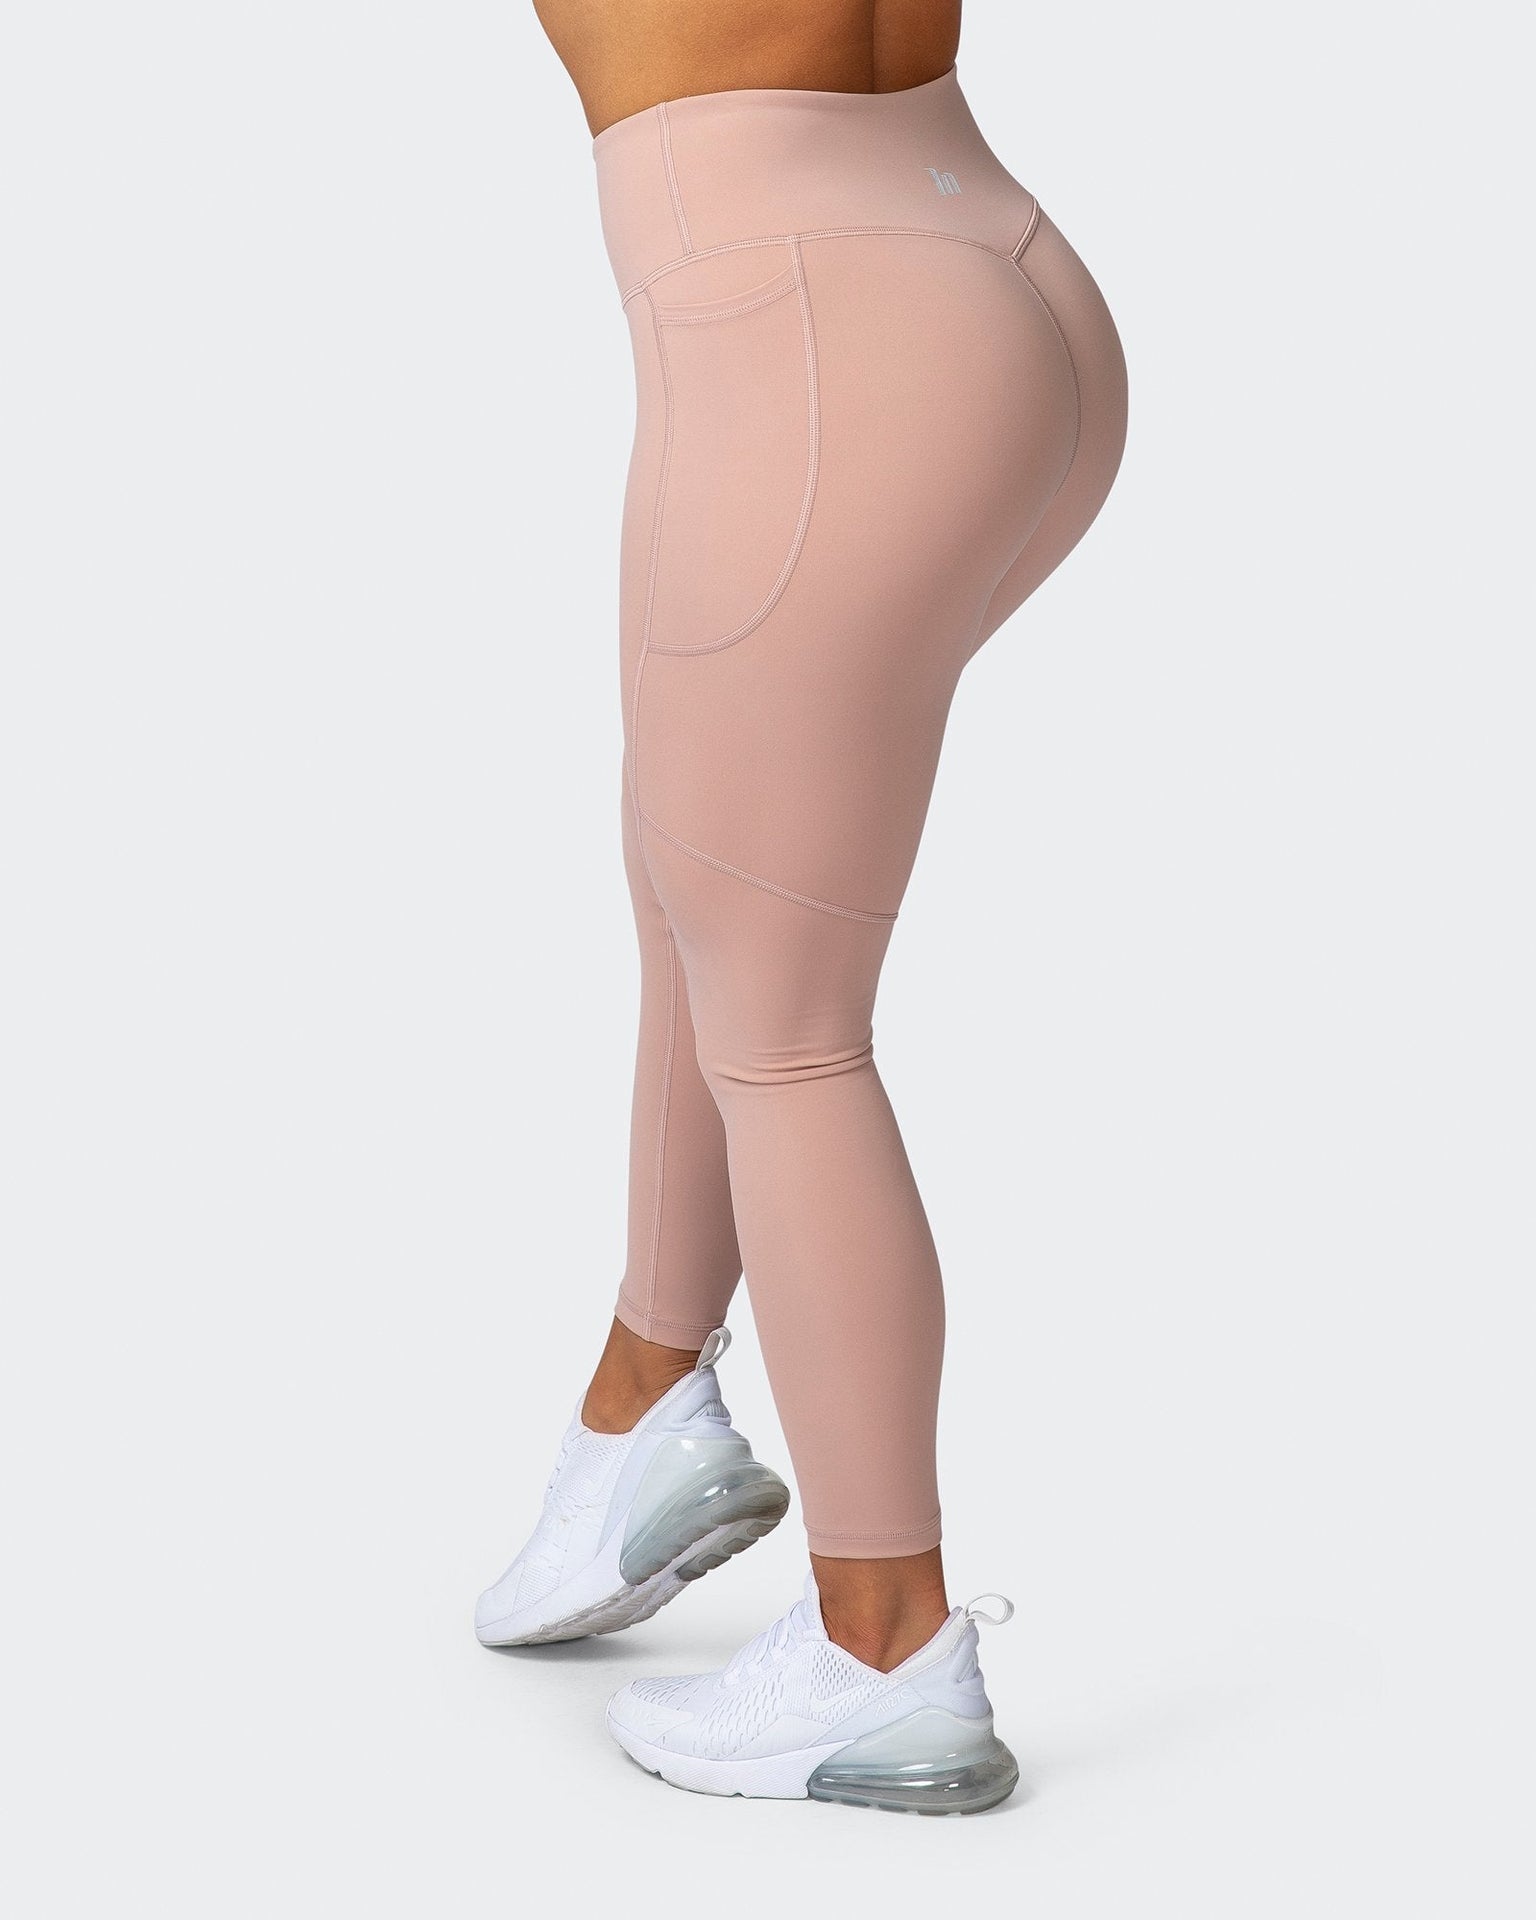 Nike Yoga statement leggings in pink